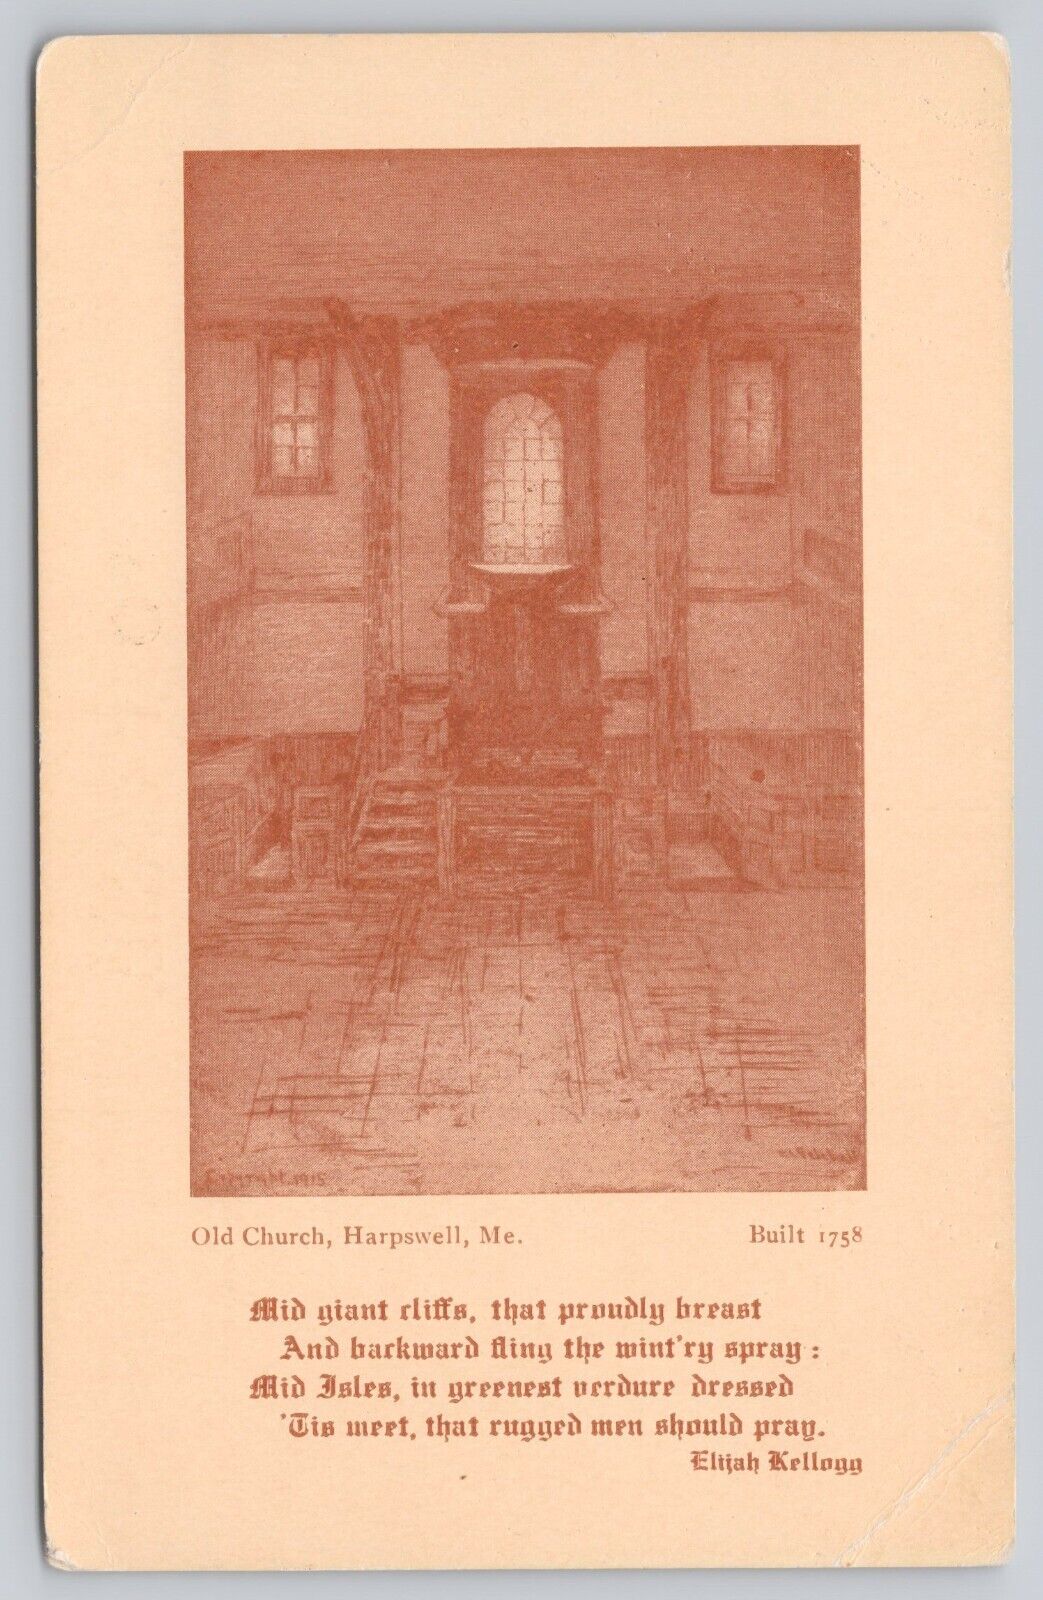 Vtg Post Card Old Church, Harpswell, Me. Built 1758 Elijah Kellogg Pulpit A177